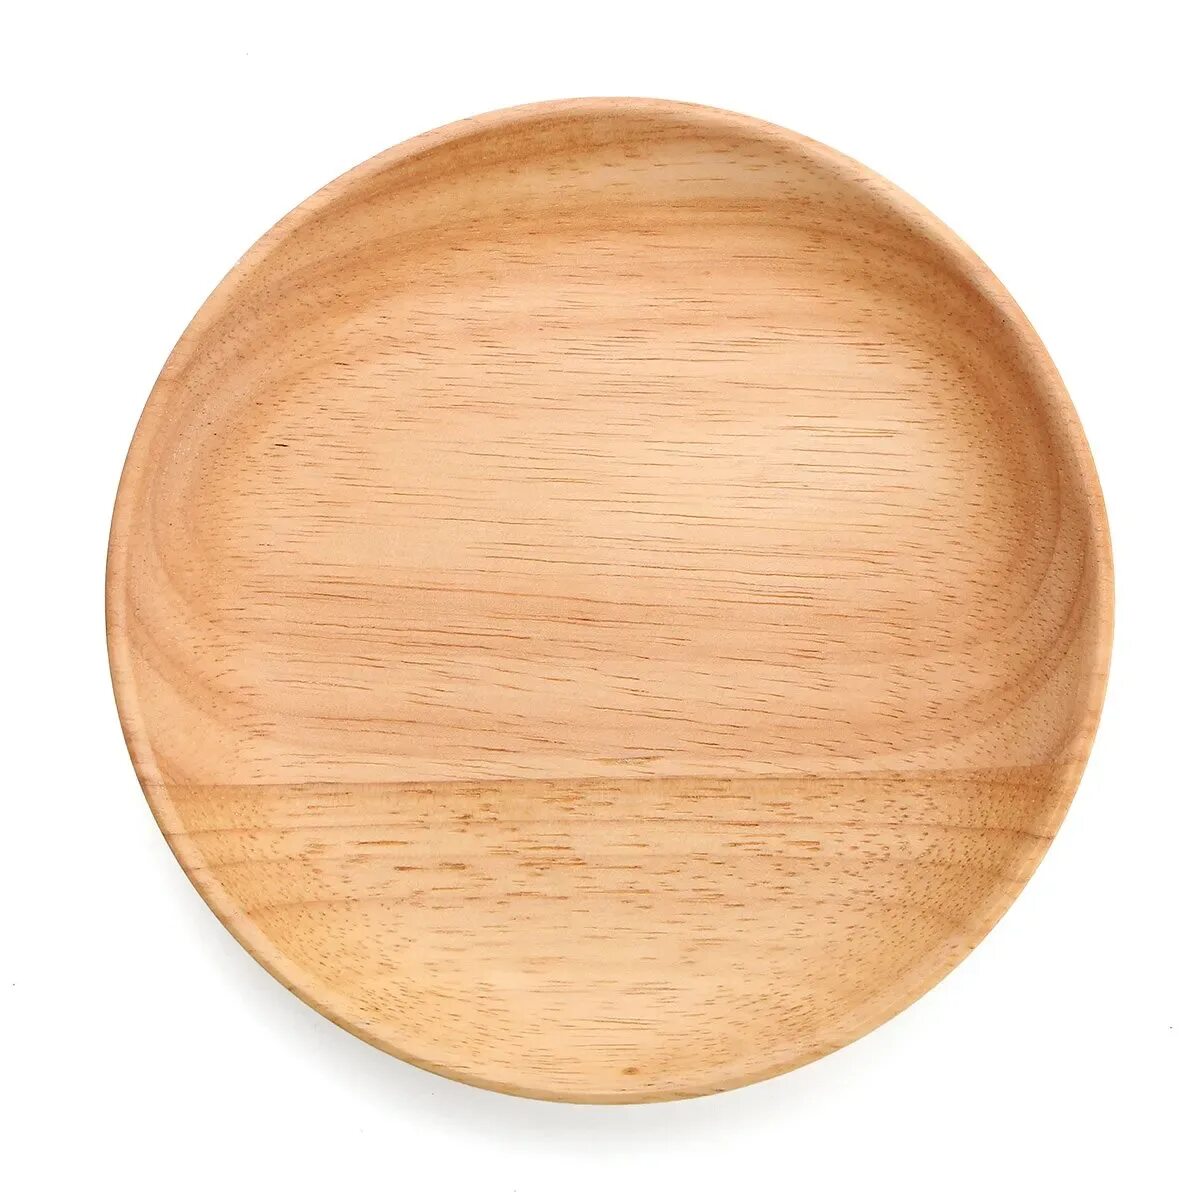 Деревянная тарелка. Круглая деревянная тарелка. Деревянная тарелка квадратная. Круглая деревянная доска.